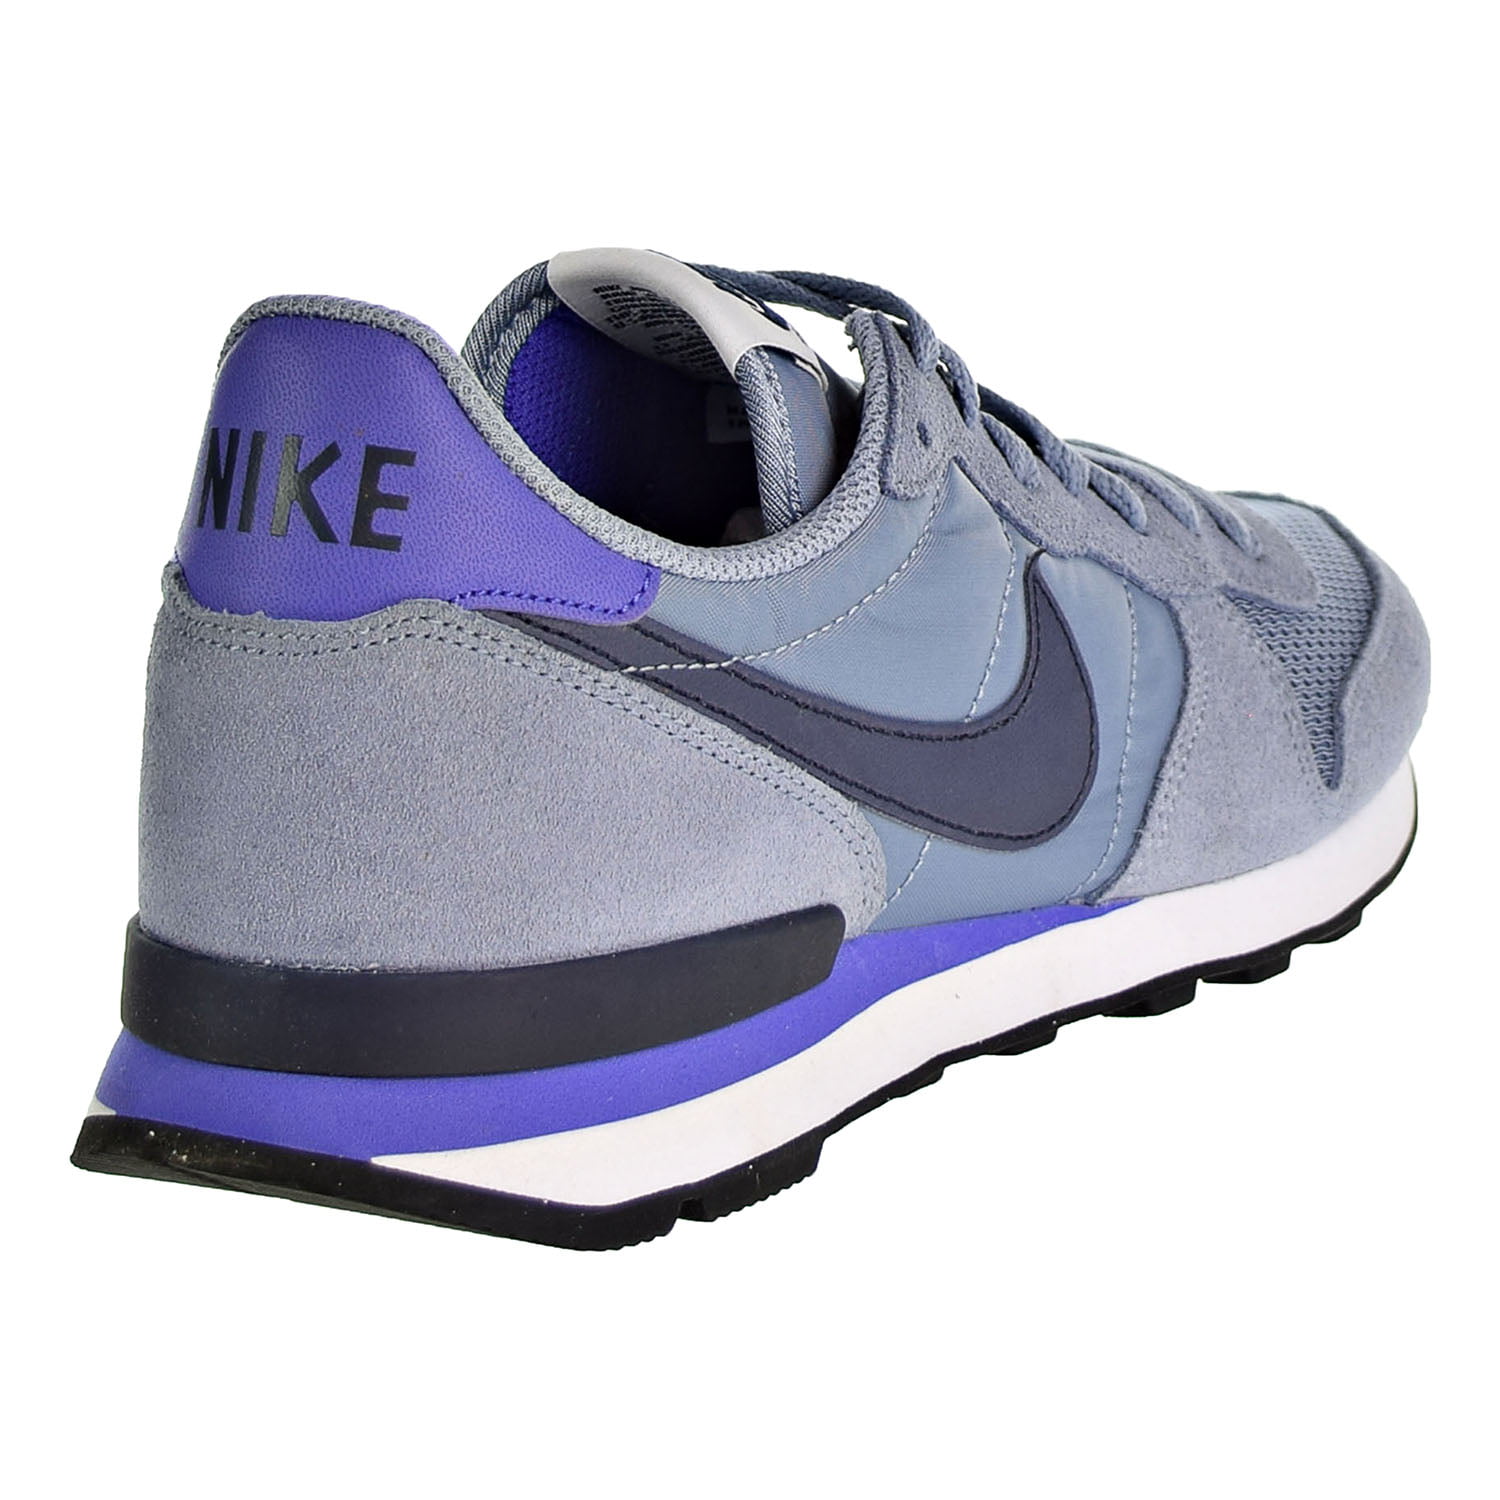 Grammatica kam supermarkt Nike Internationalist Men's Shoes Cool Blue/Obsidian/Prsn/White 631754-404  - Walmart.com